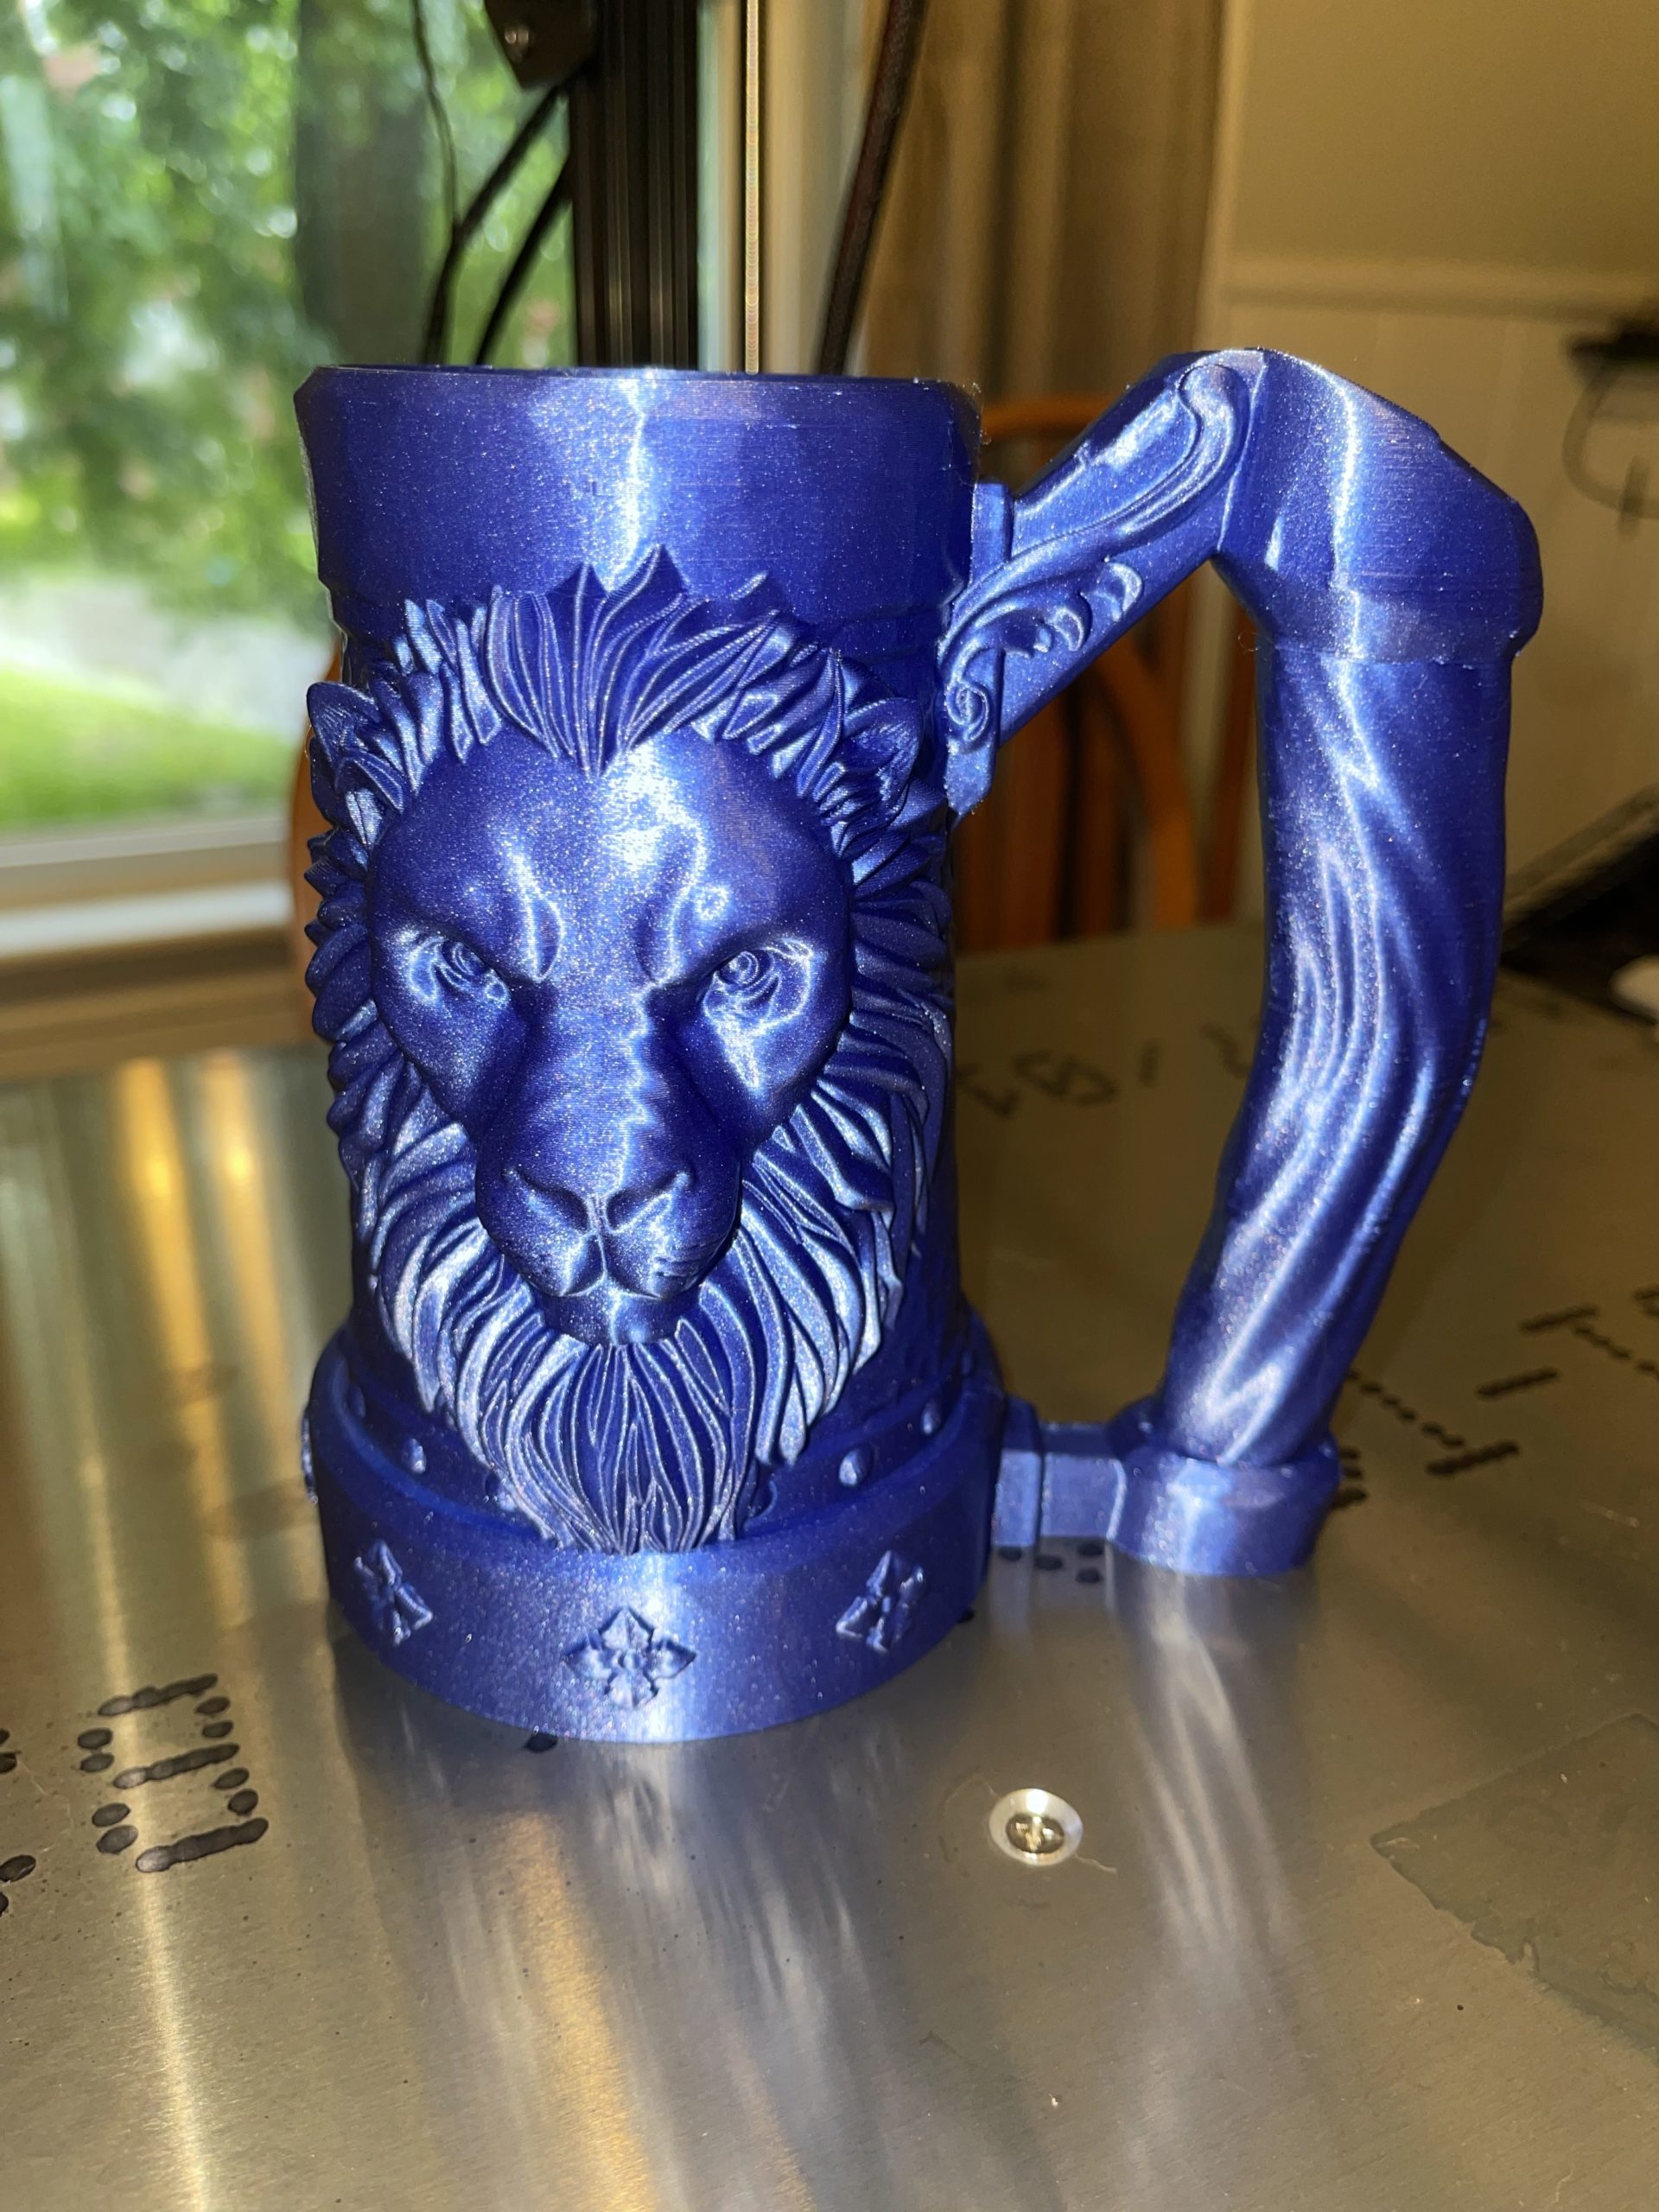 Mythic Mug – Lion’s Brew Can Holder